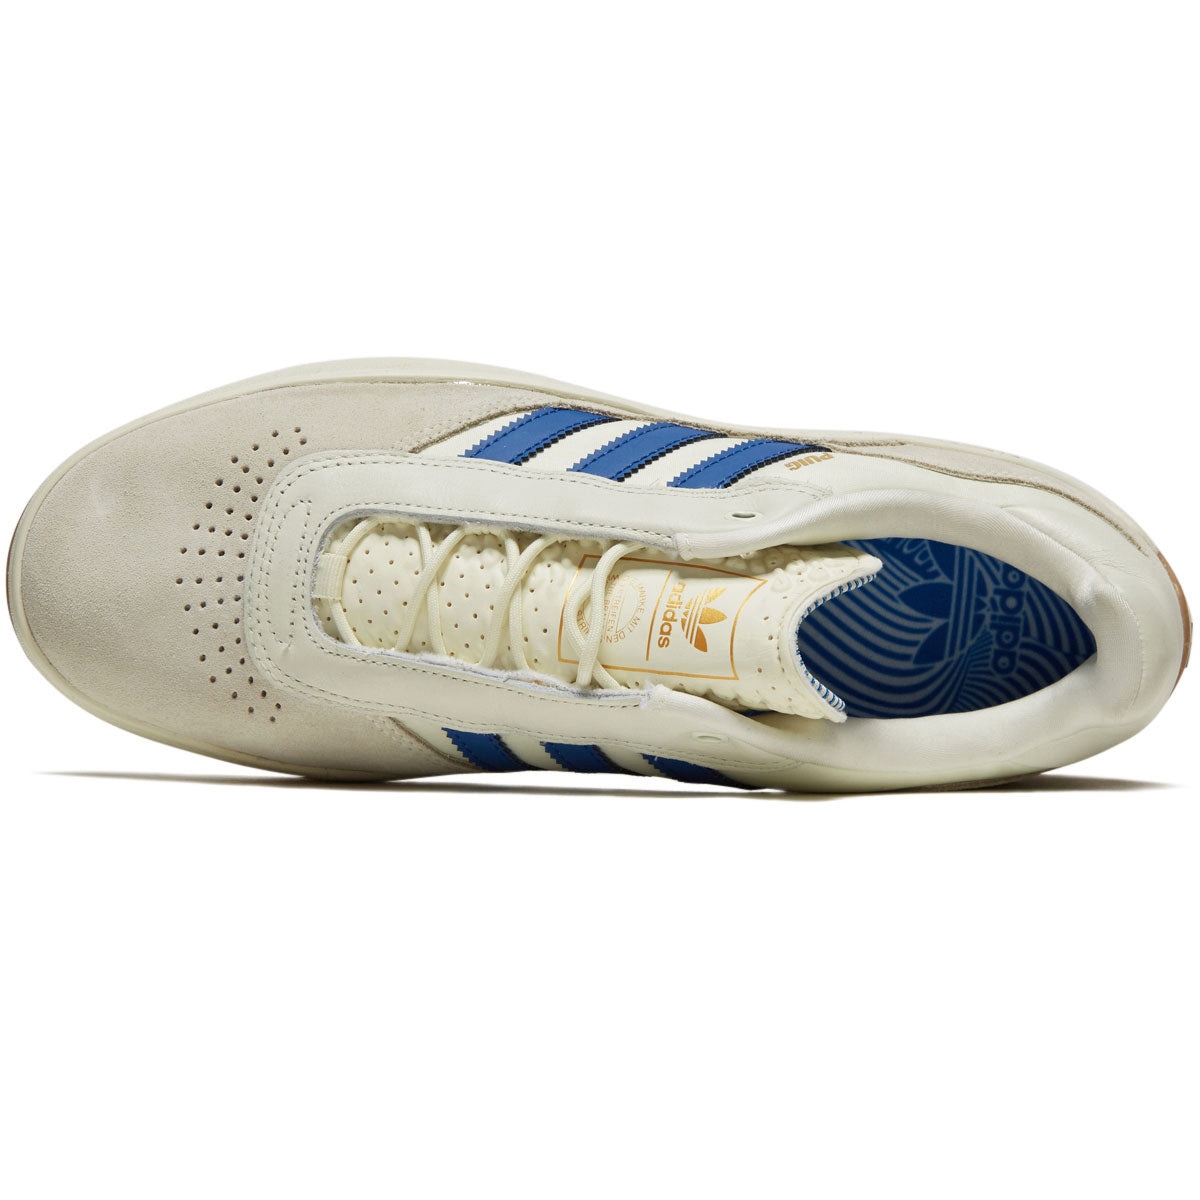 Adidas Puig Shoes - Ivory/Team Royal Blue/Gum image 3